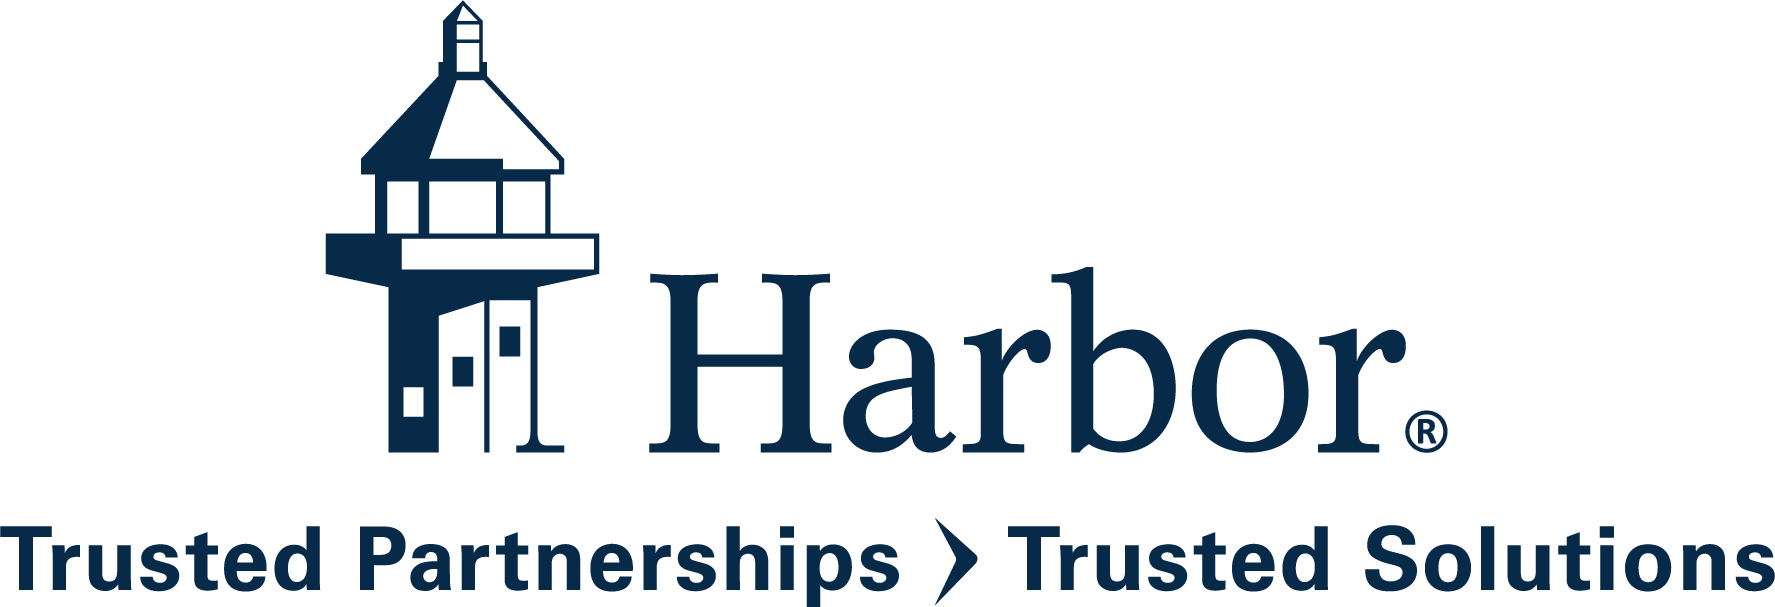 Harbor Capital Advisors, Inc. logo